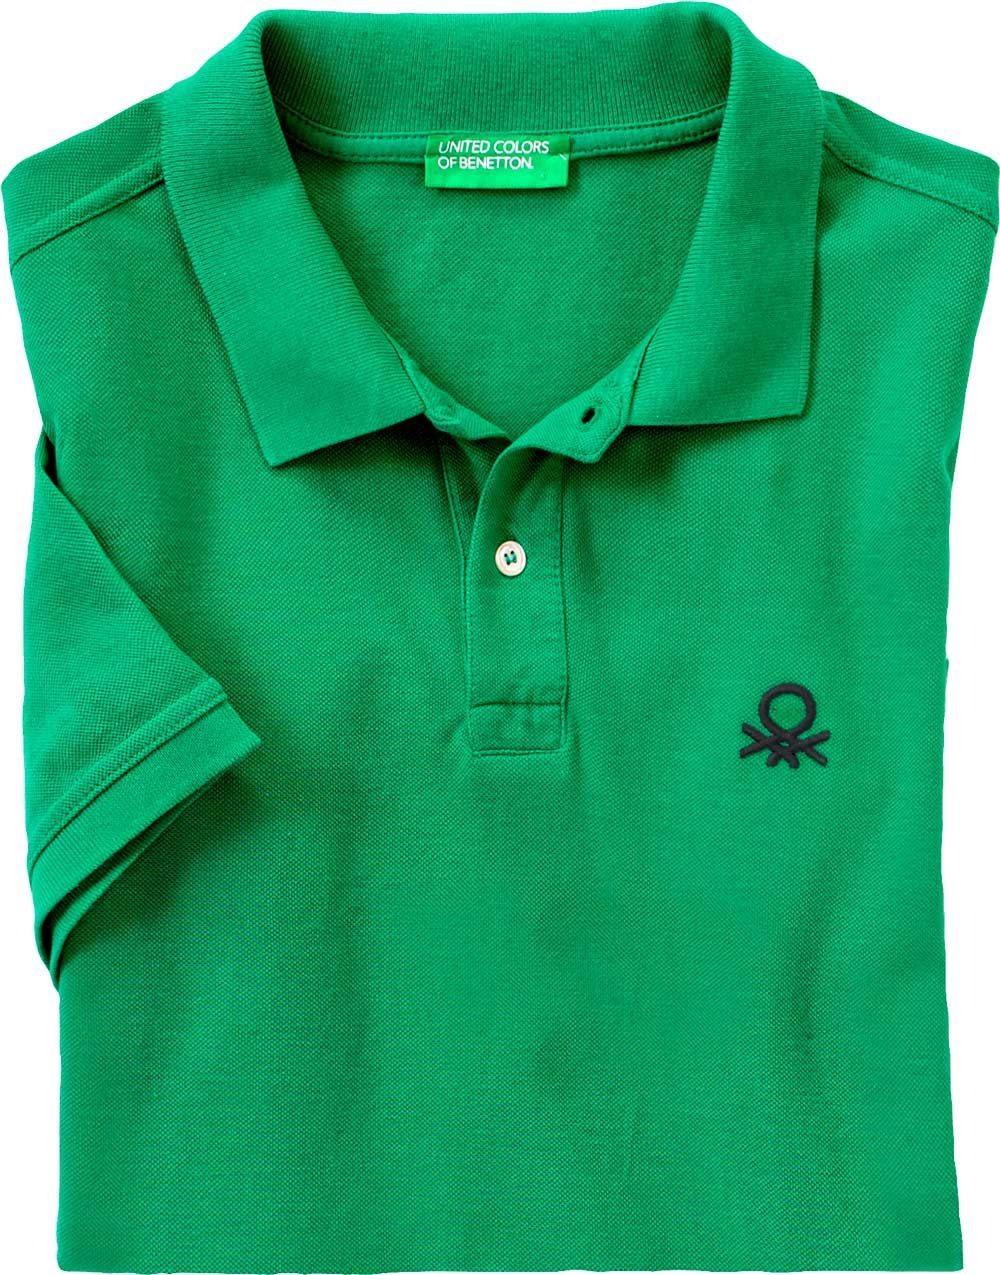 Baumwolle aus Benetton United of Poloshirt Colors grün